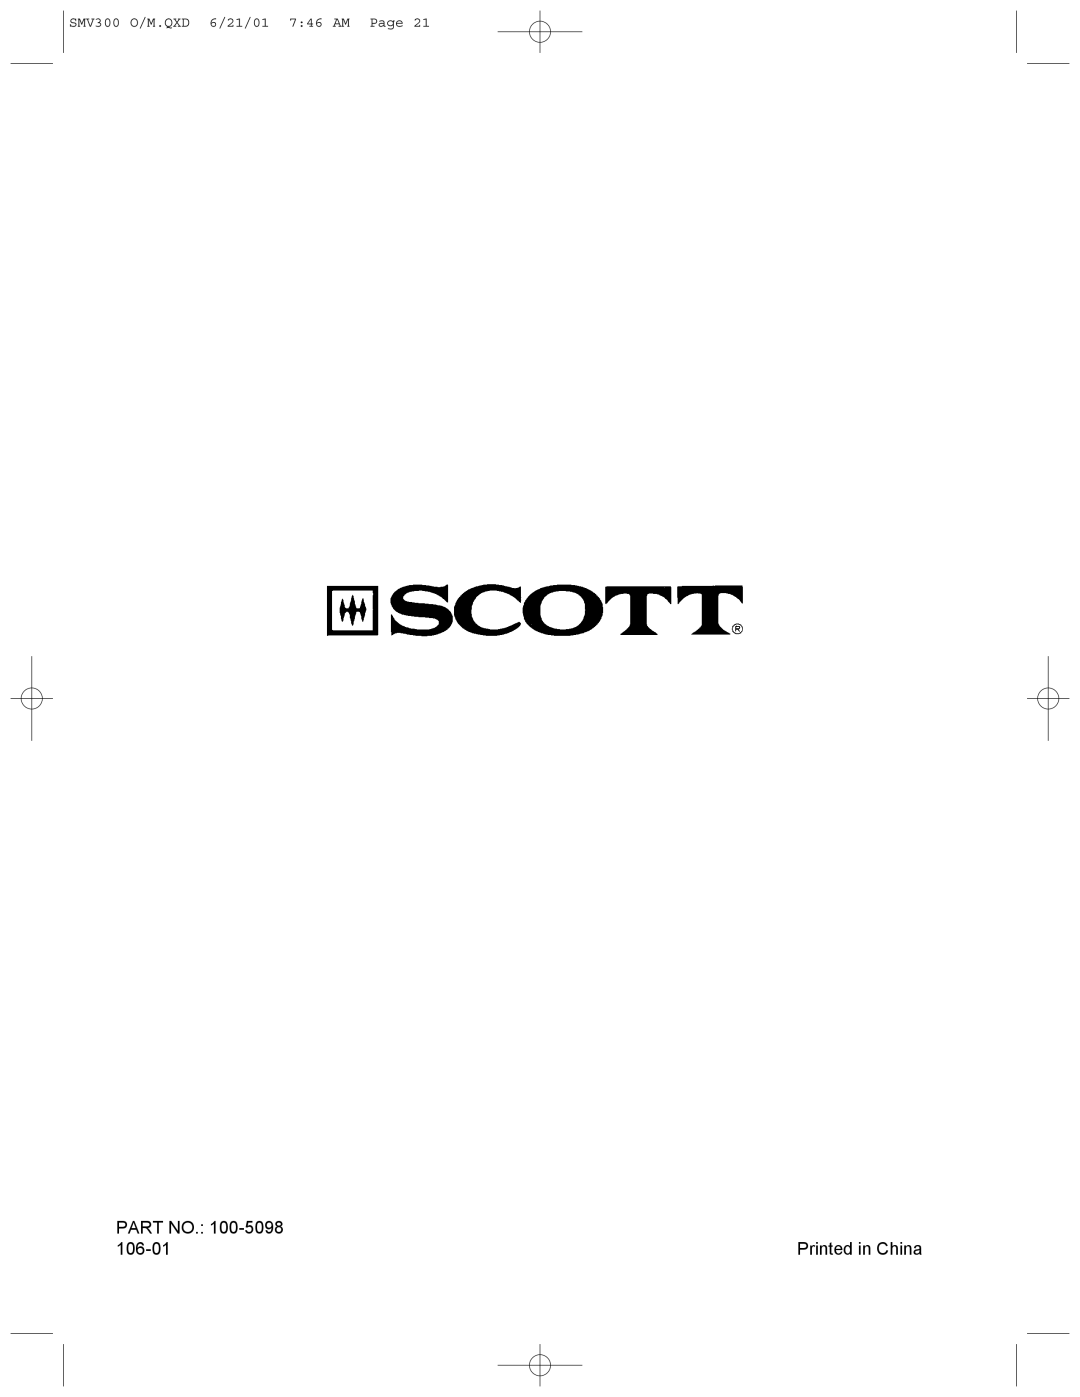 Scotts instruction manual 106-01, SMV300 O/M.QXD 6/21/01 7 46 AM Page 